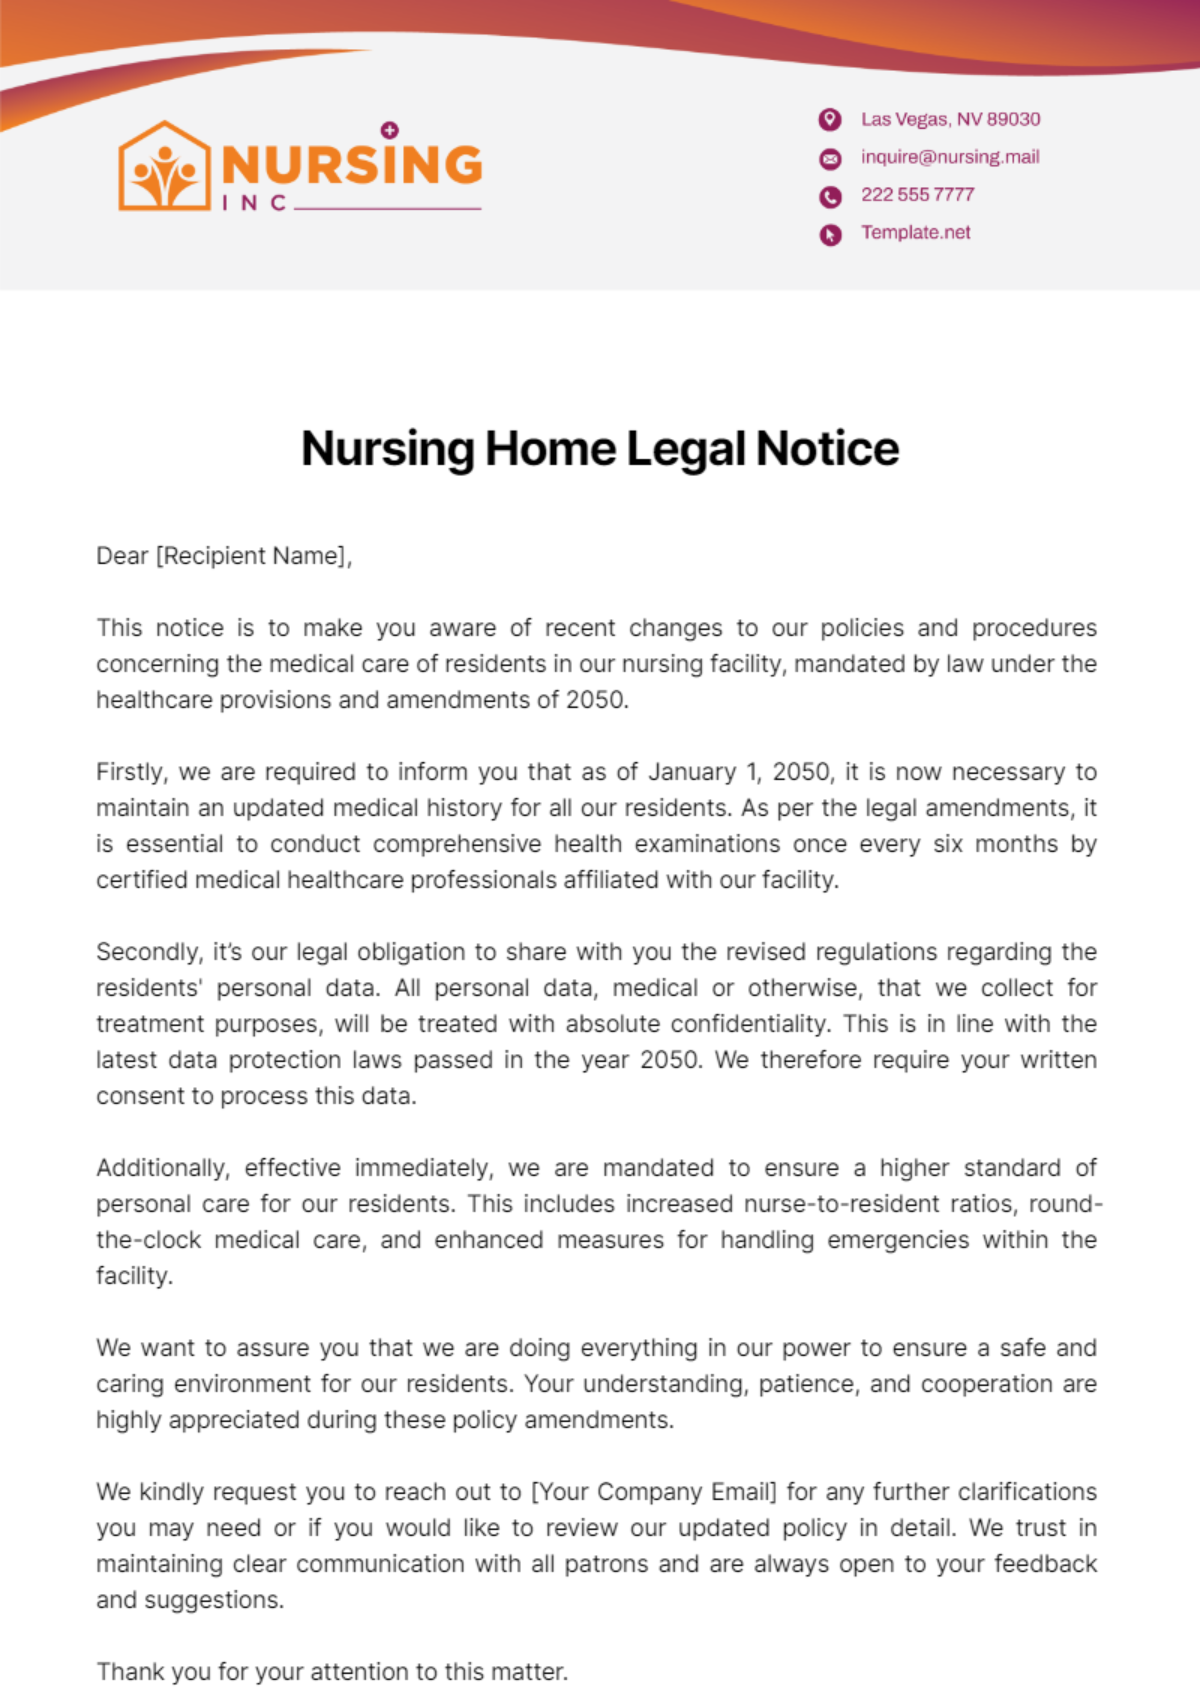 Nursing Home Legal Notice Template